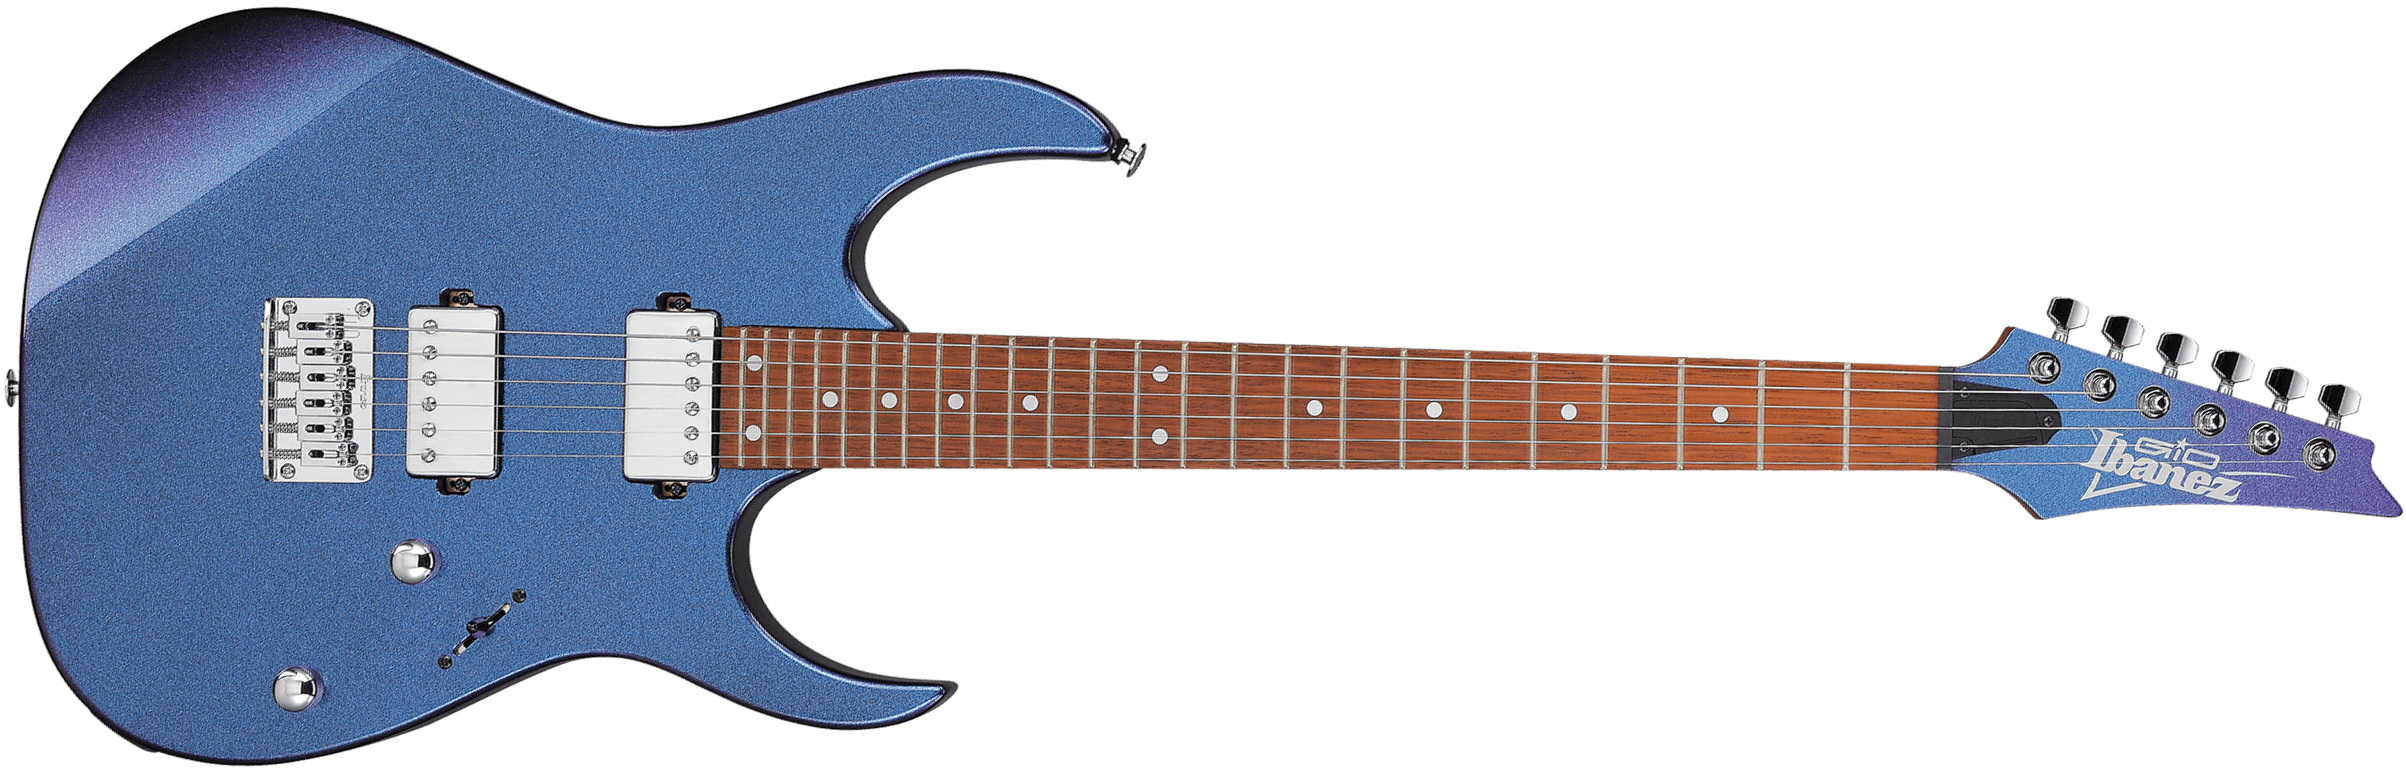 Ibanez Grg121sp Bmc Ltd Gio Hh Ht Jat - Blue Metal Cameleon - Guitarra eléctrica con forma de str. - Main picture